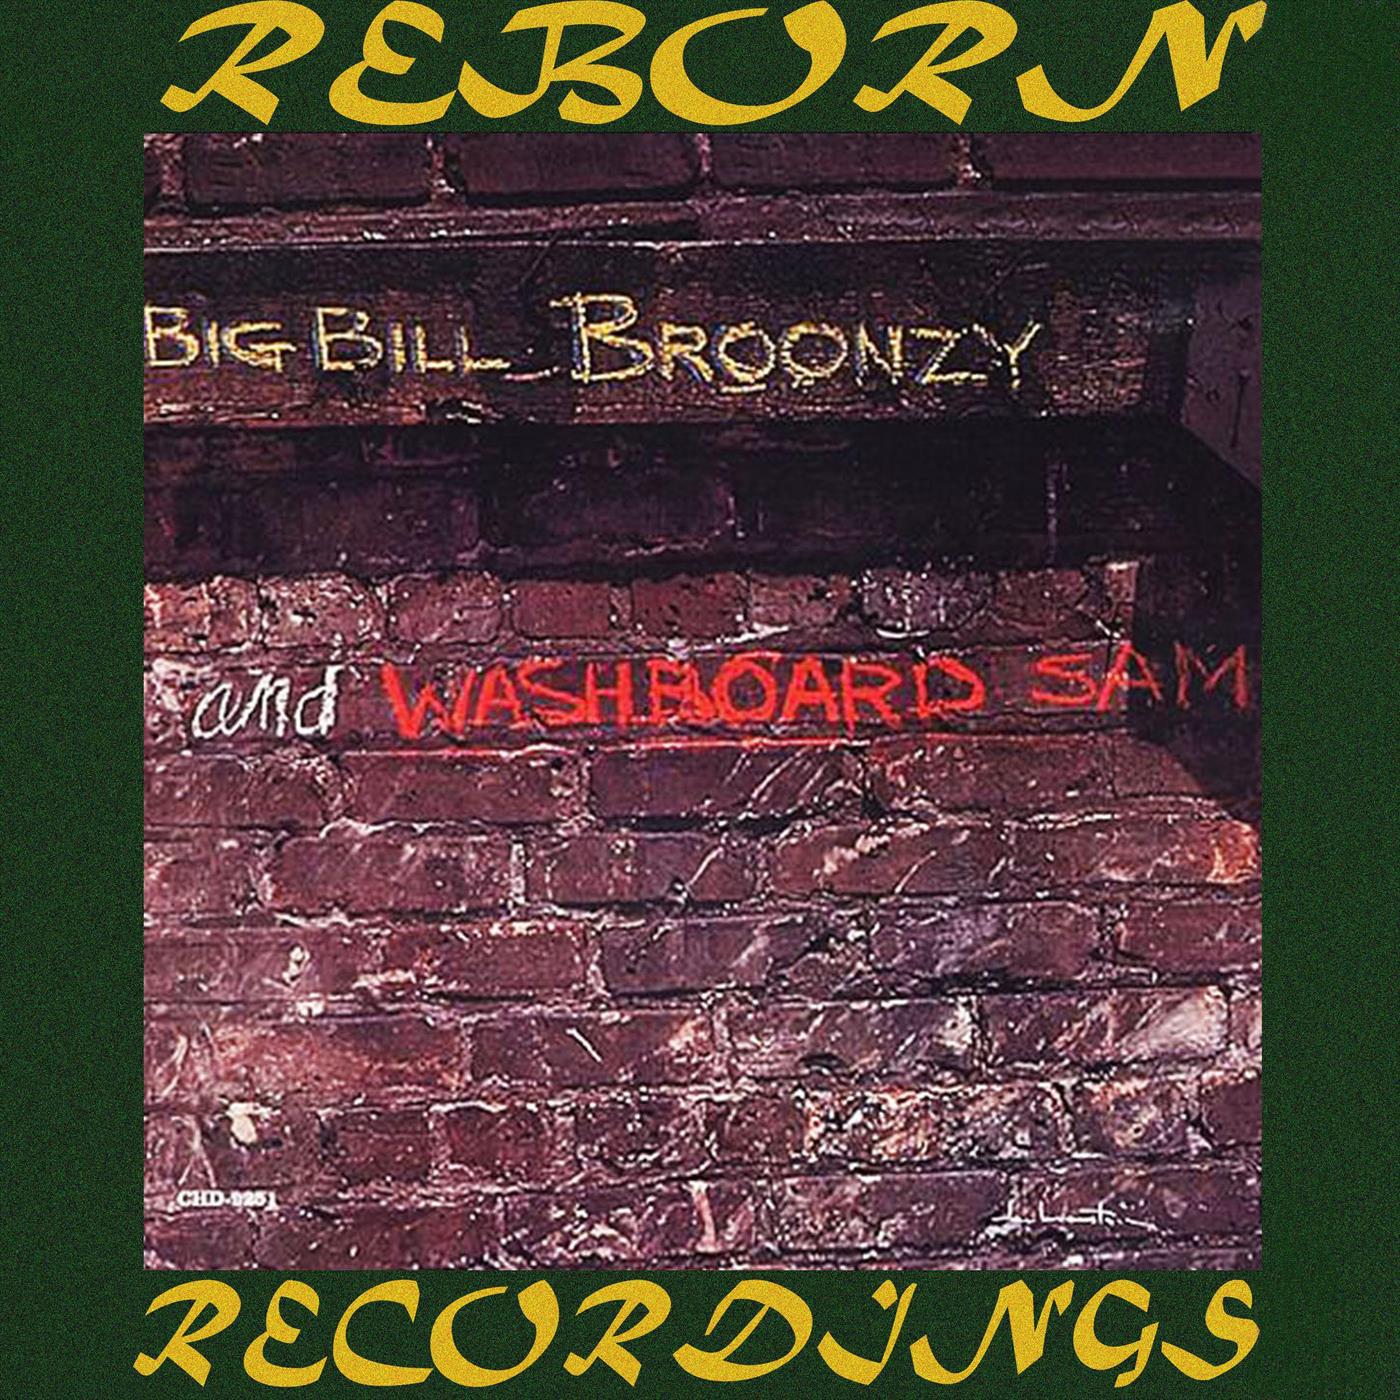 Big Bill Broonzy and Washboard Sam (HD Remastered)